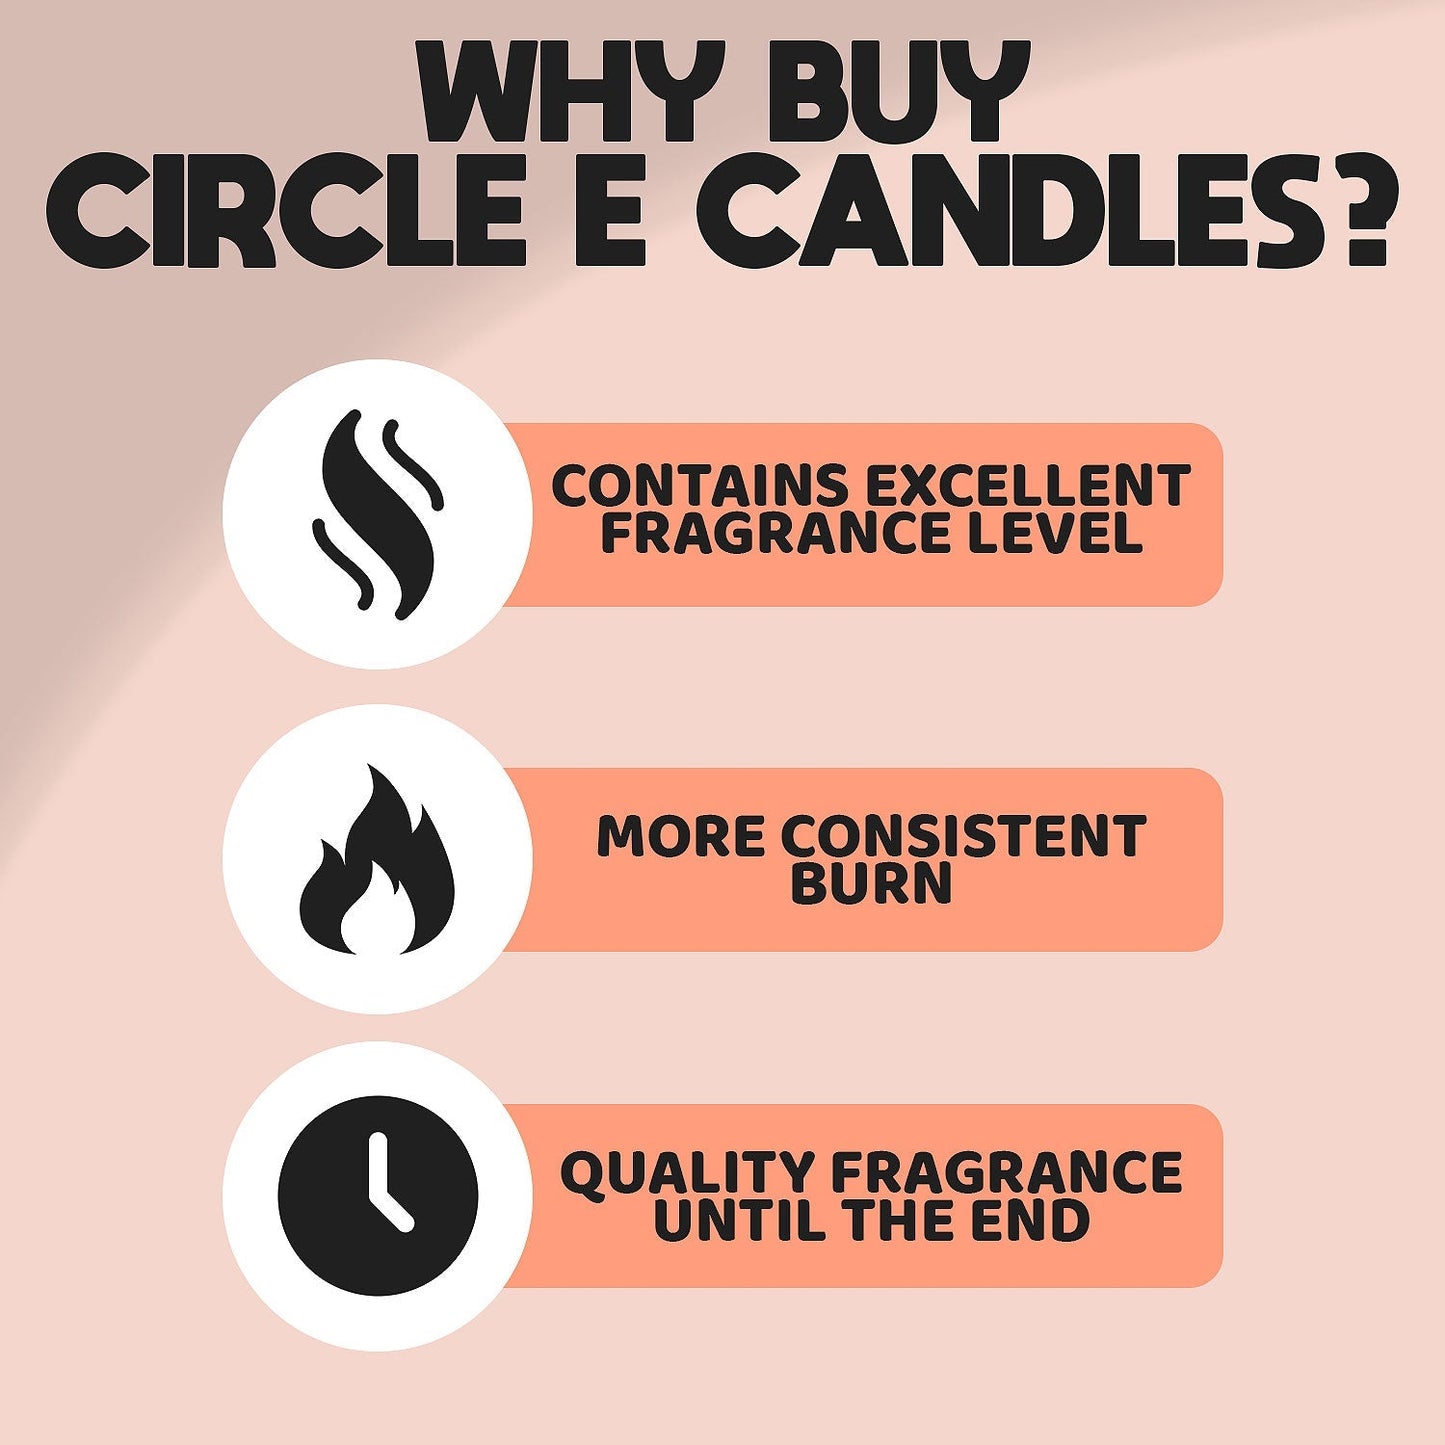 Why Buy Circle E Candles